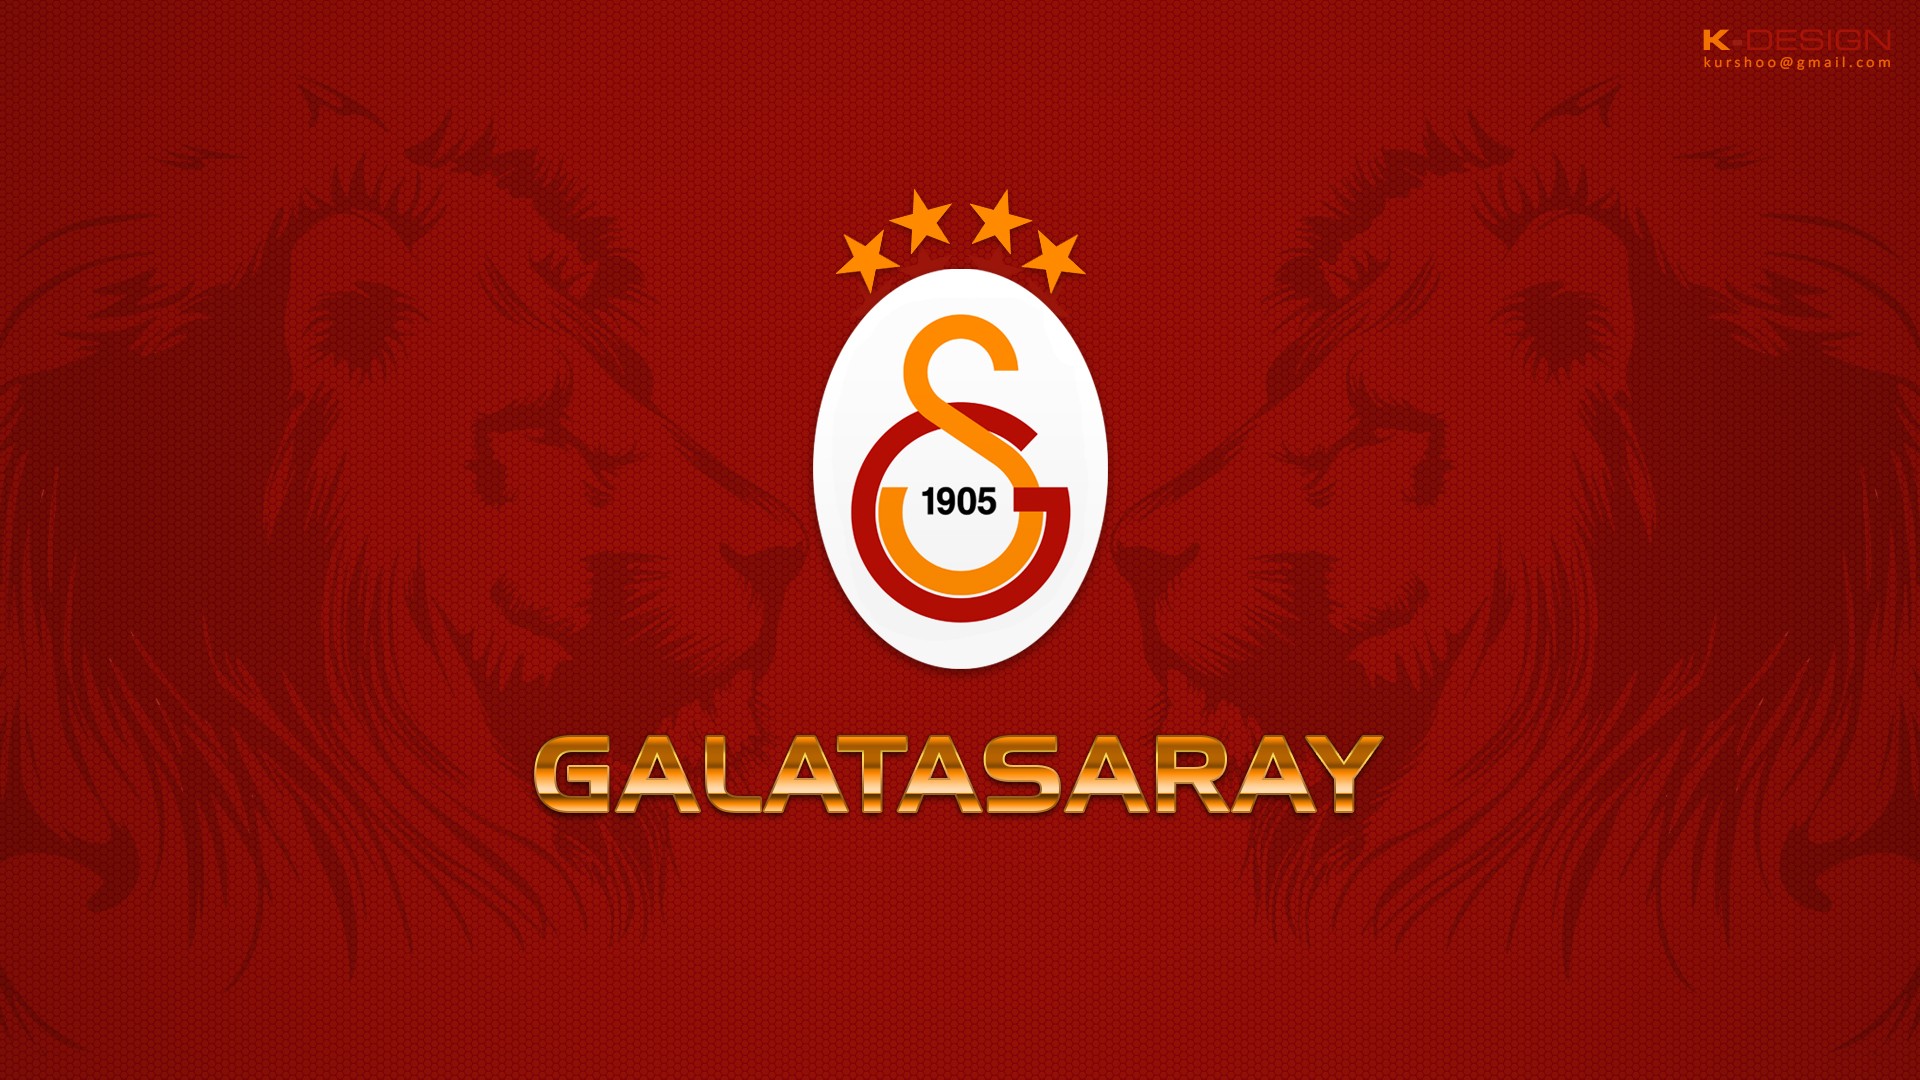 General 1920x1080 Galatasaray S.K. stars soccer clubs lion logo sport 1905 (Year)